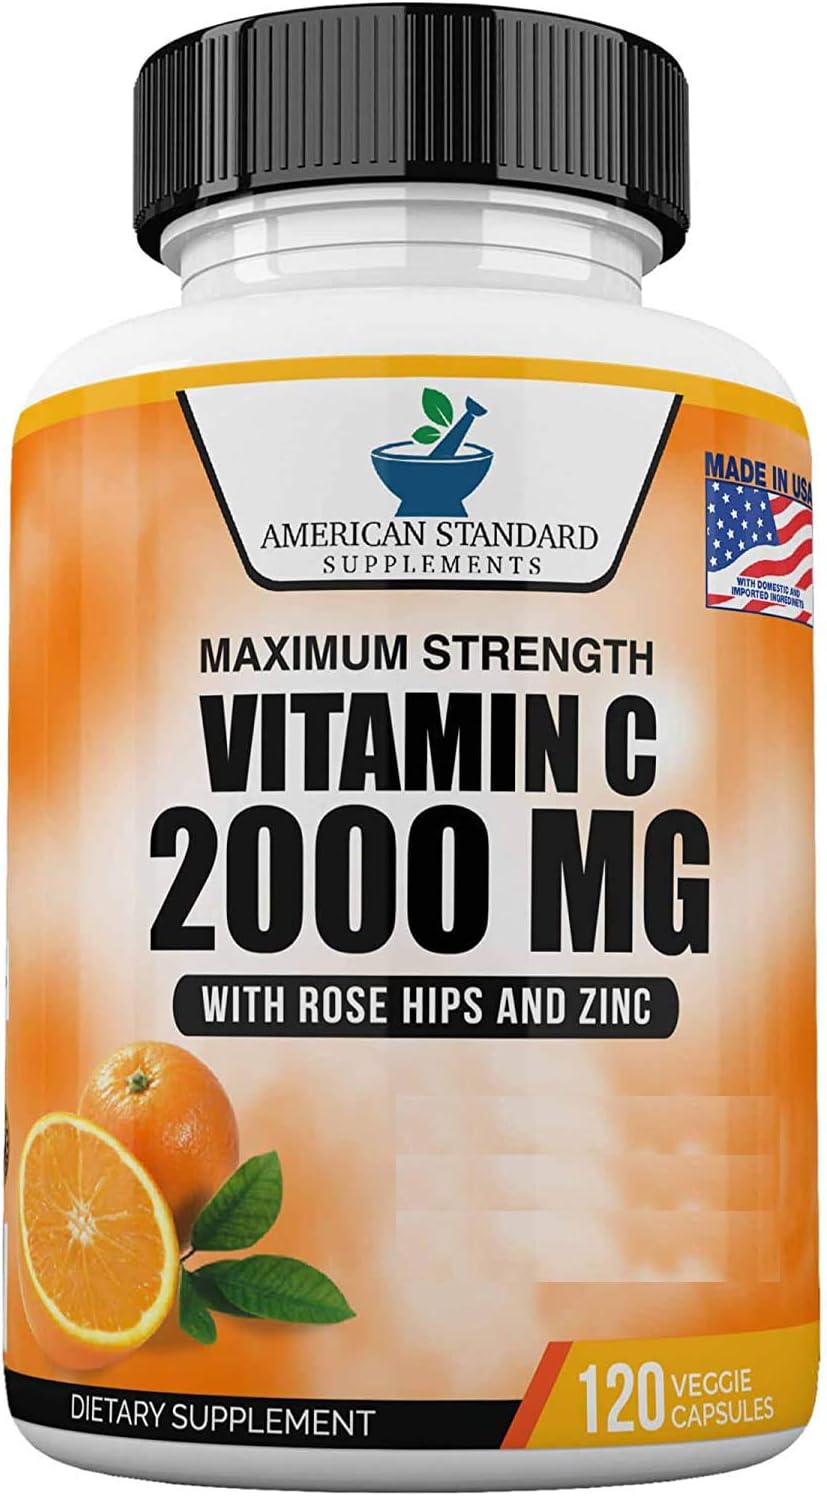 American Standard Supplements Vitamin C 2000mg, Zinc 40mg, and Rose HIPS 50mg Per Serving – Vegan, Gluten Free, Non-GMO, 120 Capsules, 60 Servings